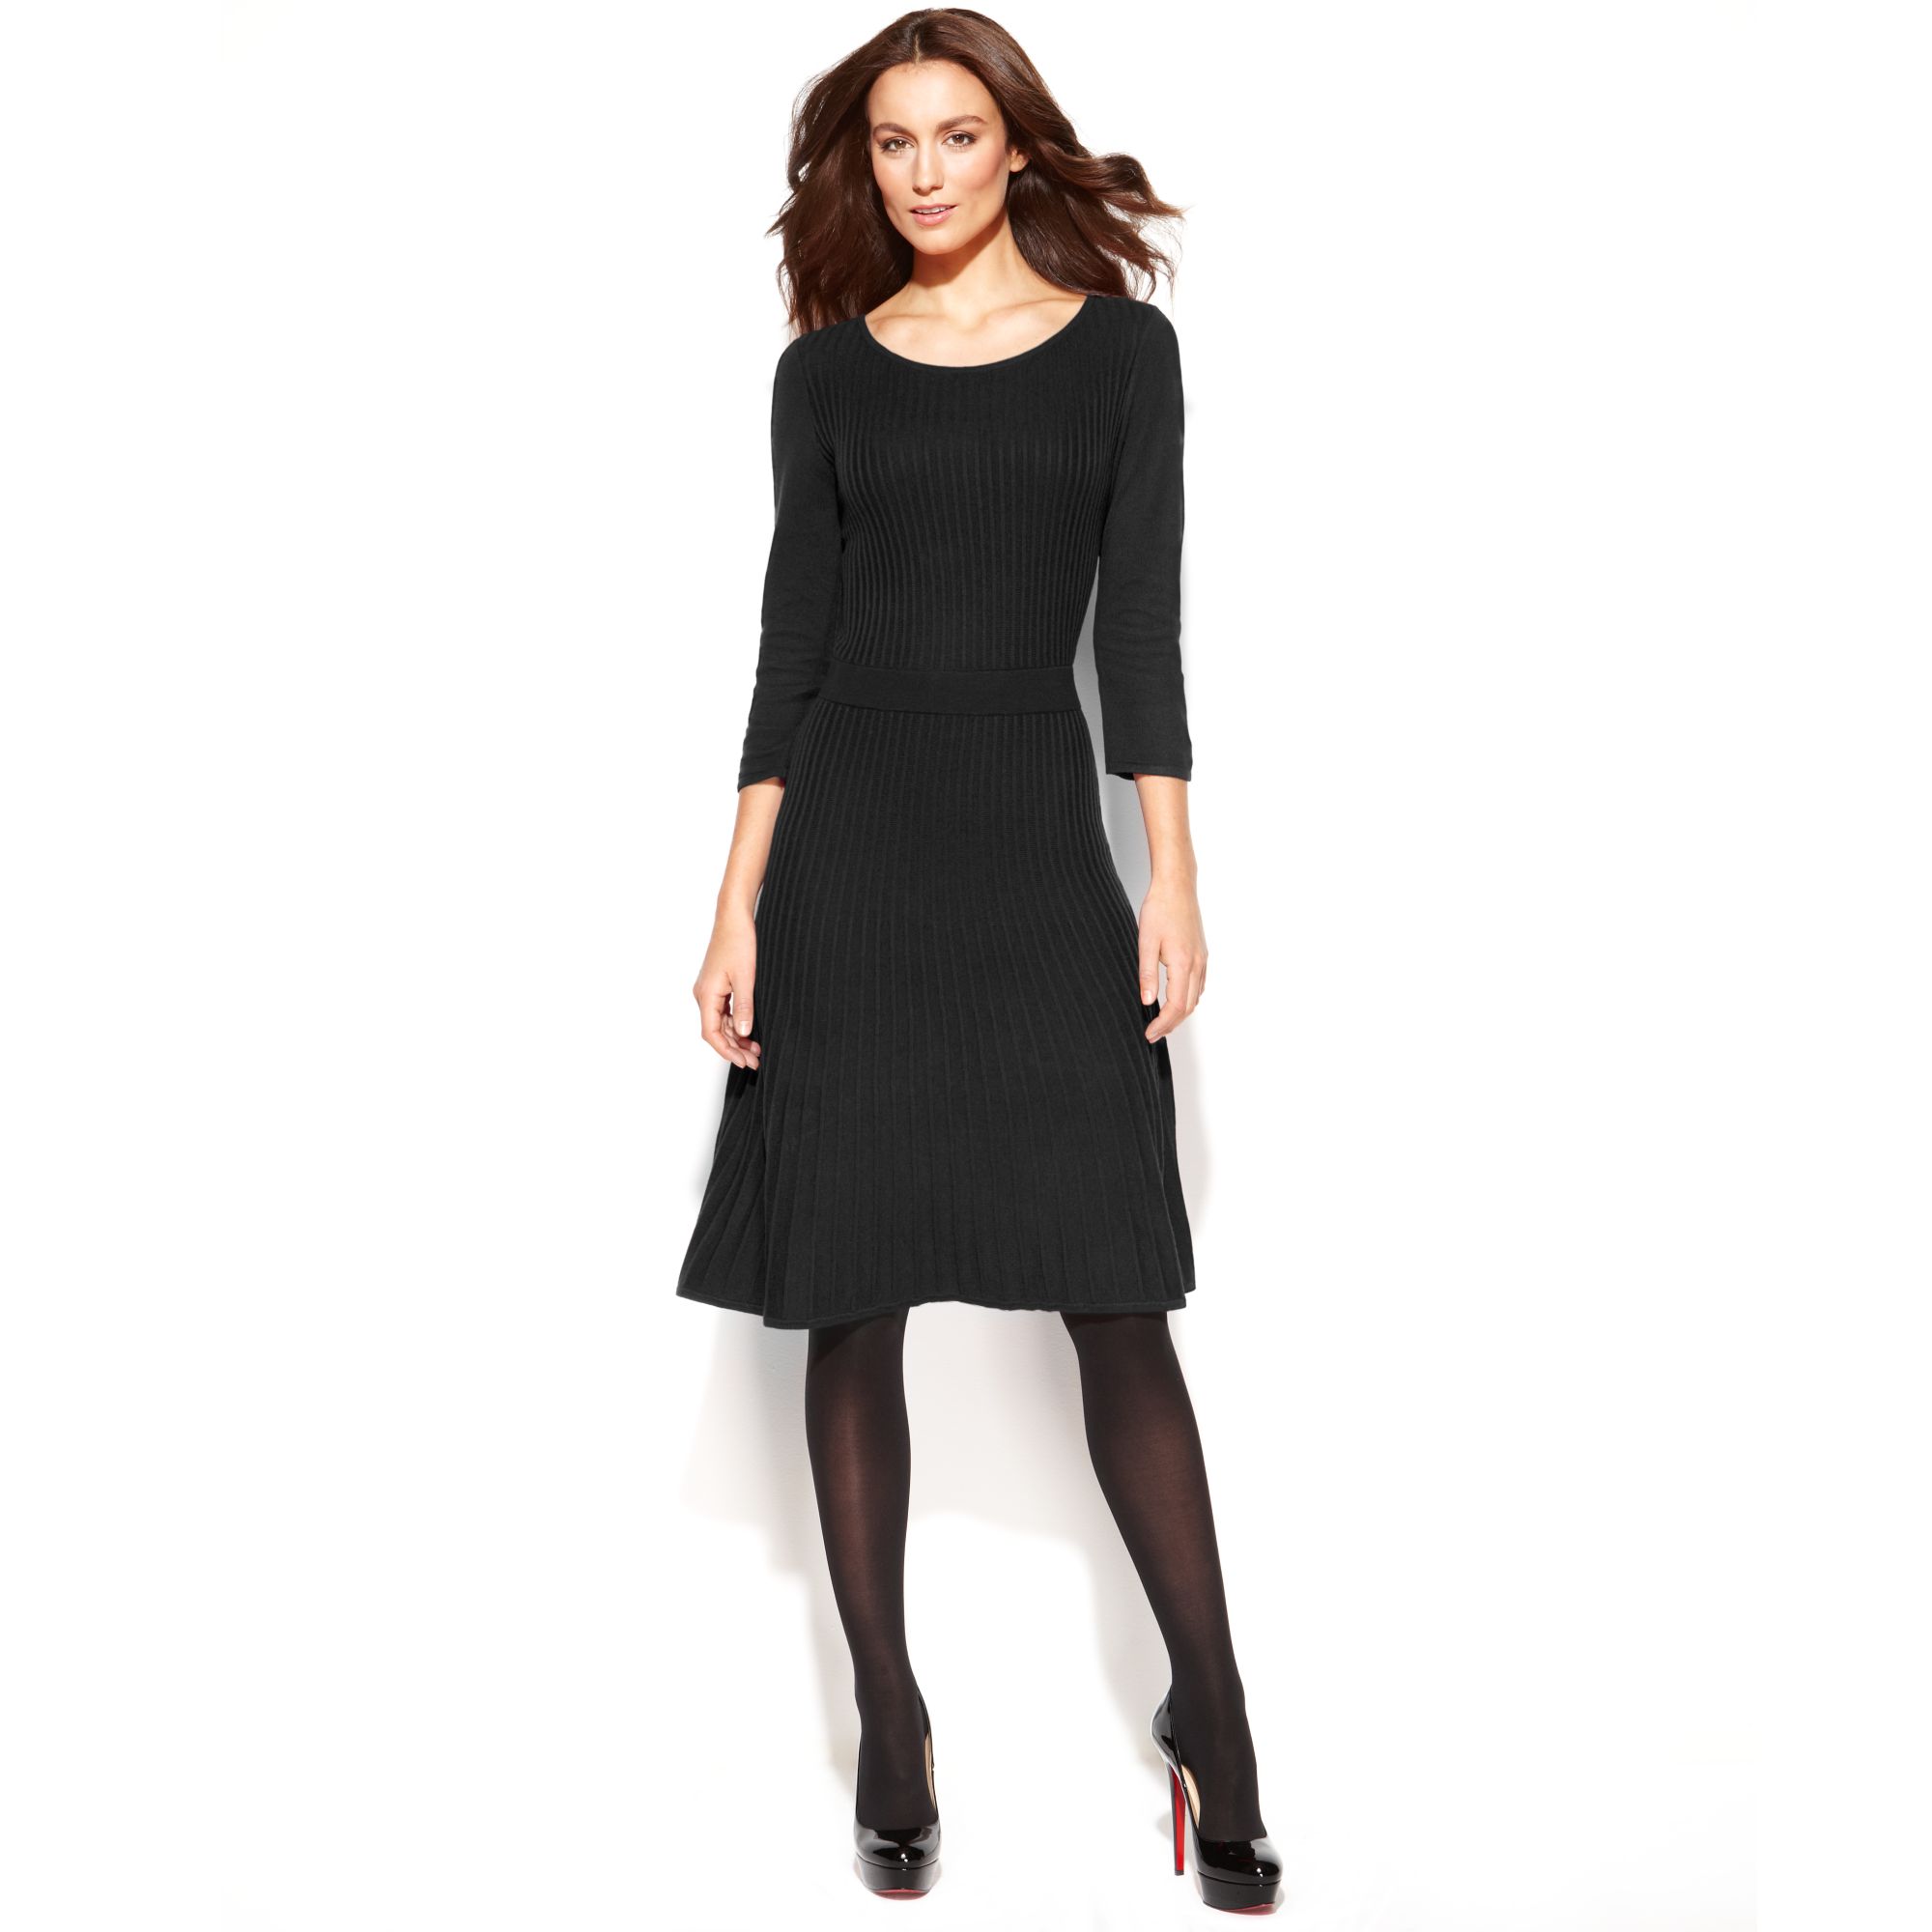 Lyst - Ellen tracy Threequartersleeve Pleated Sweater Dress in Black